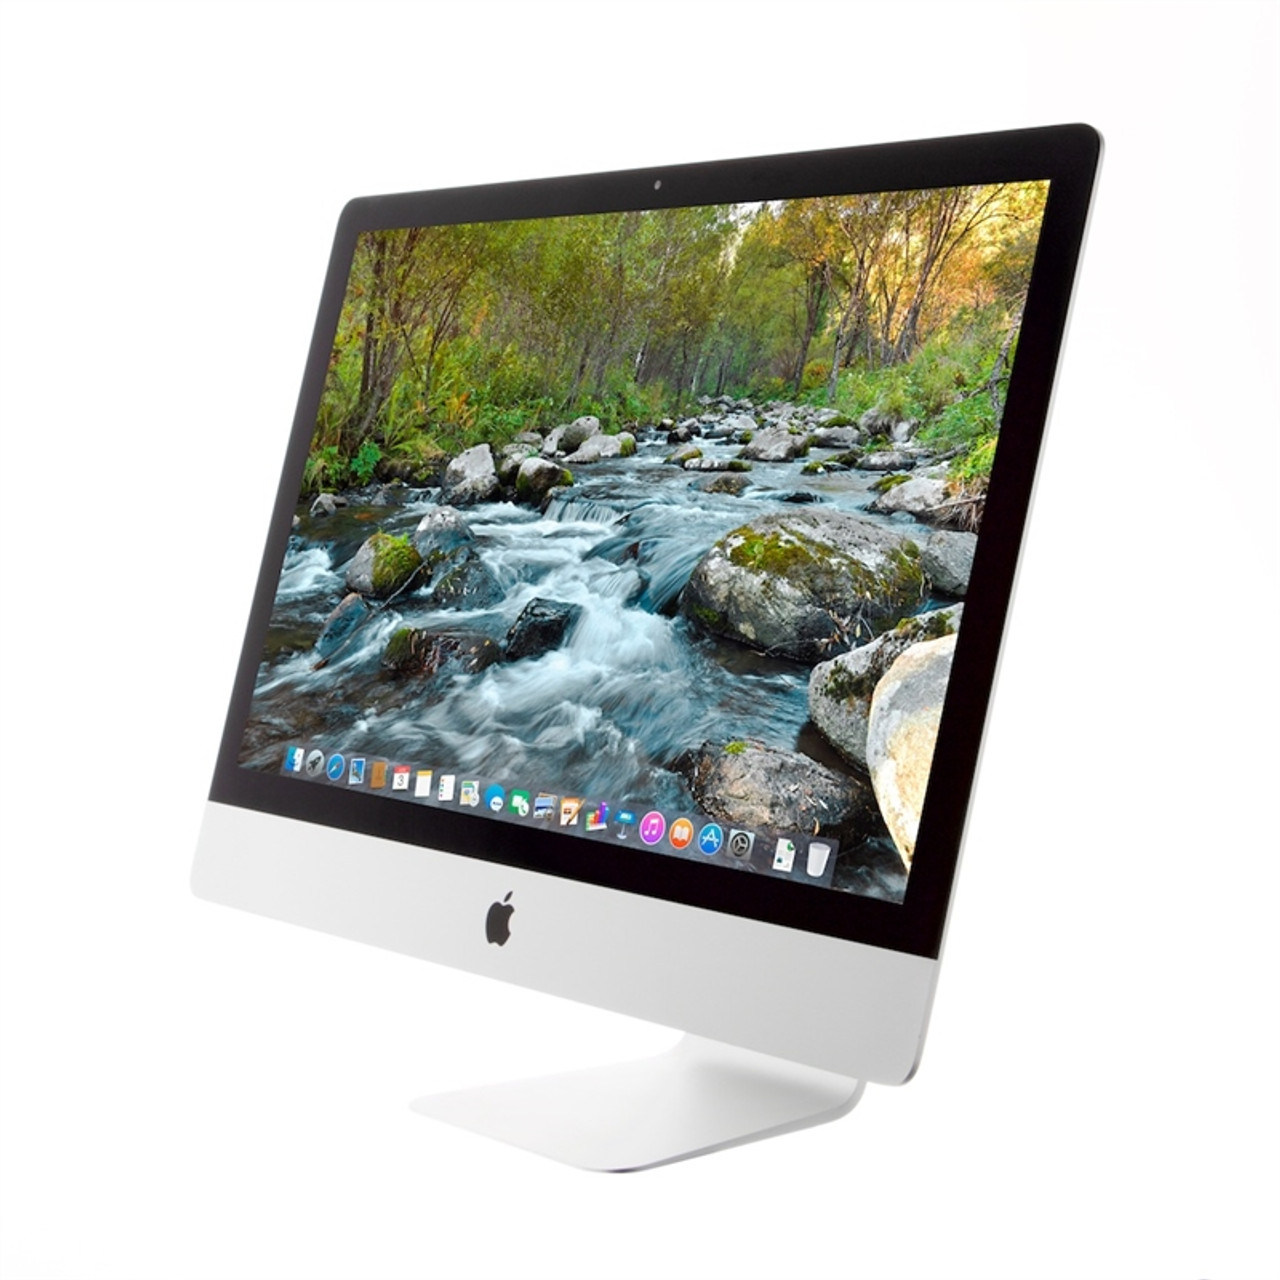 iMac 27インチ Late 2013 - Macデスクトップ